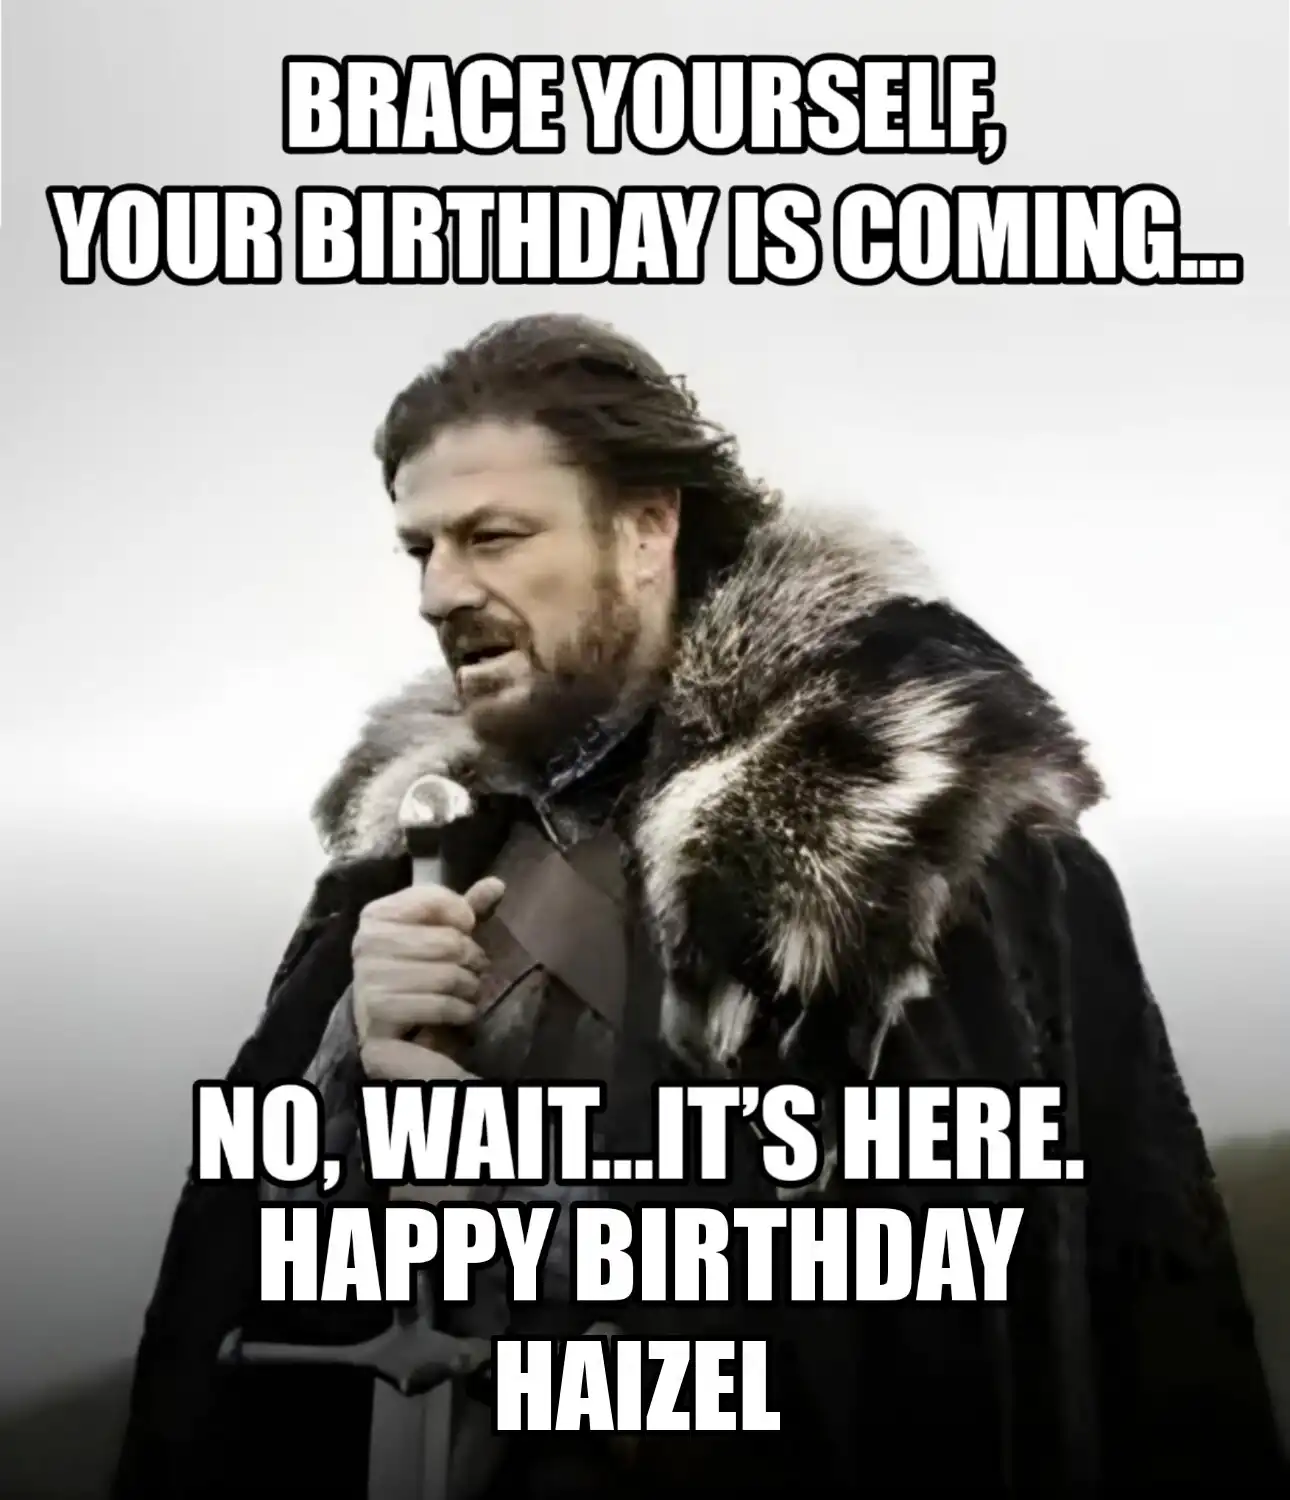 Happy Birthday Haizel Brace Yourself Your Birthday Is Coming Meme